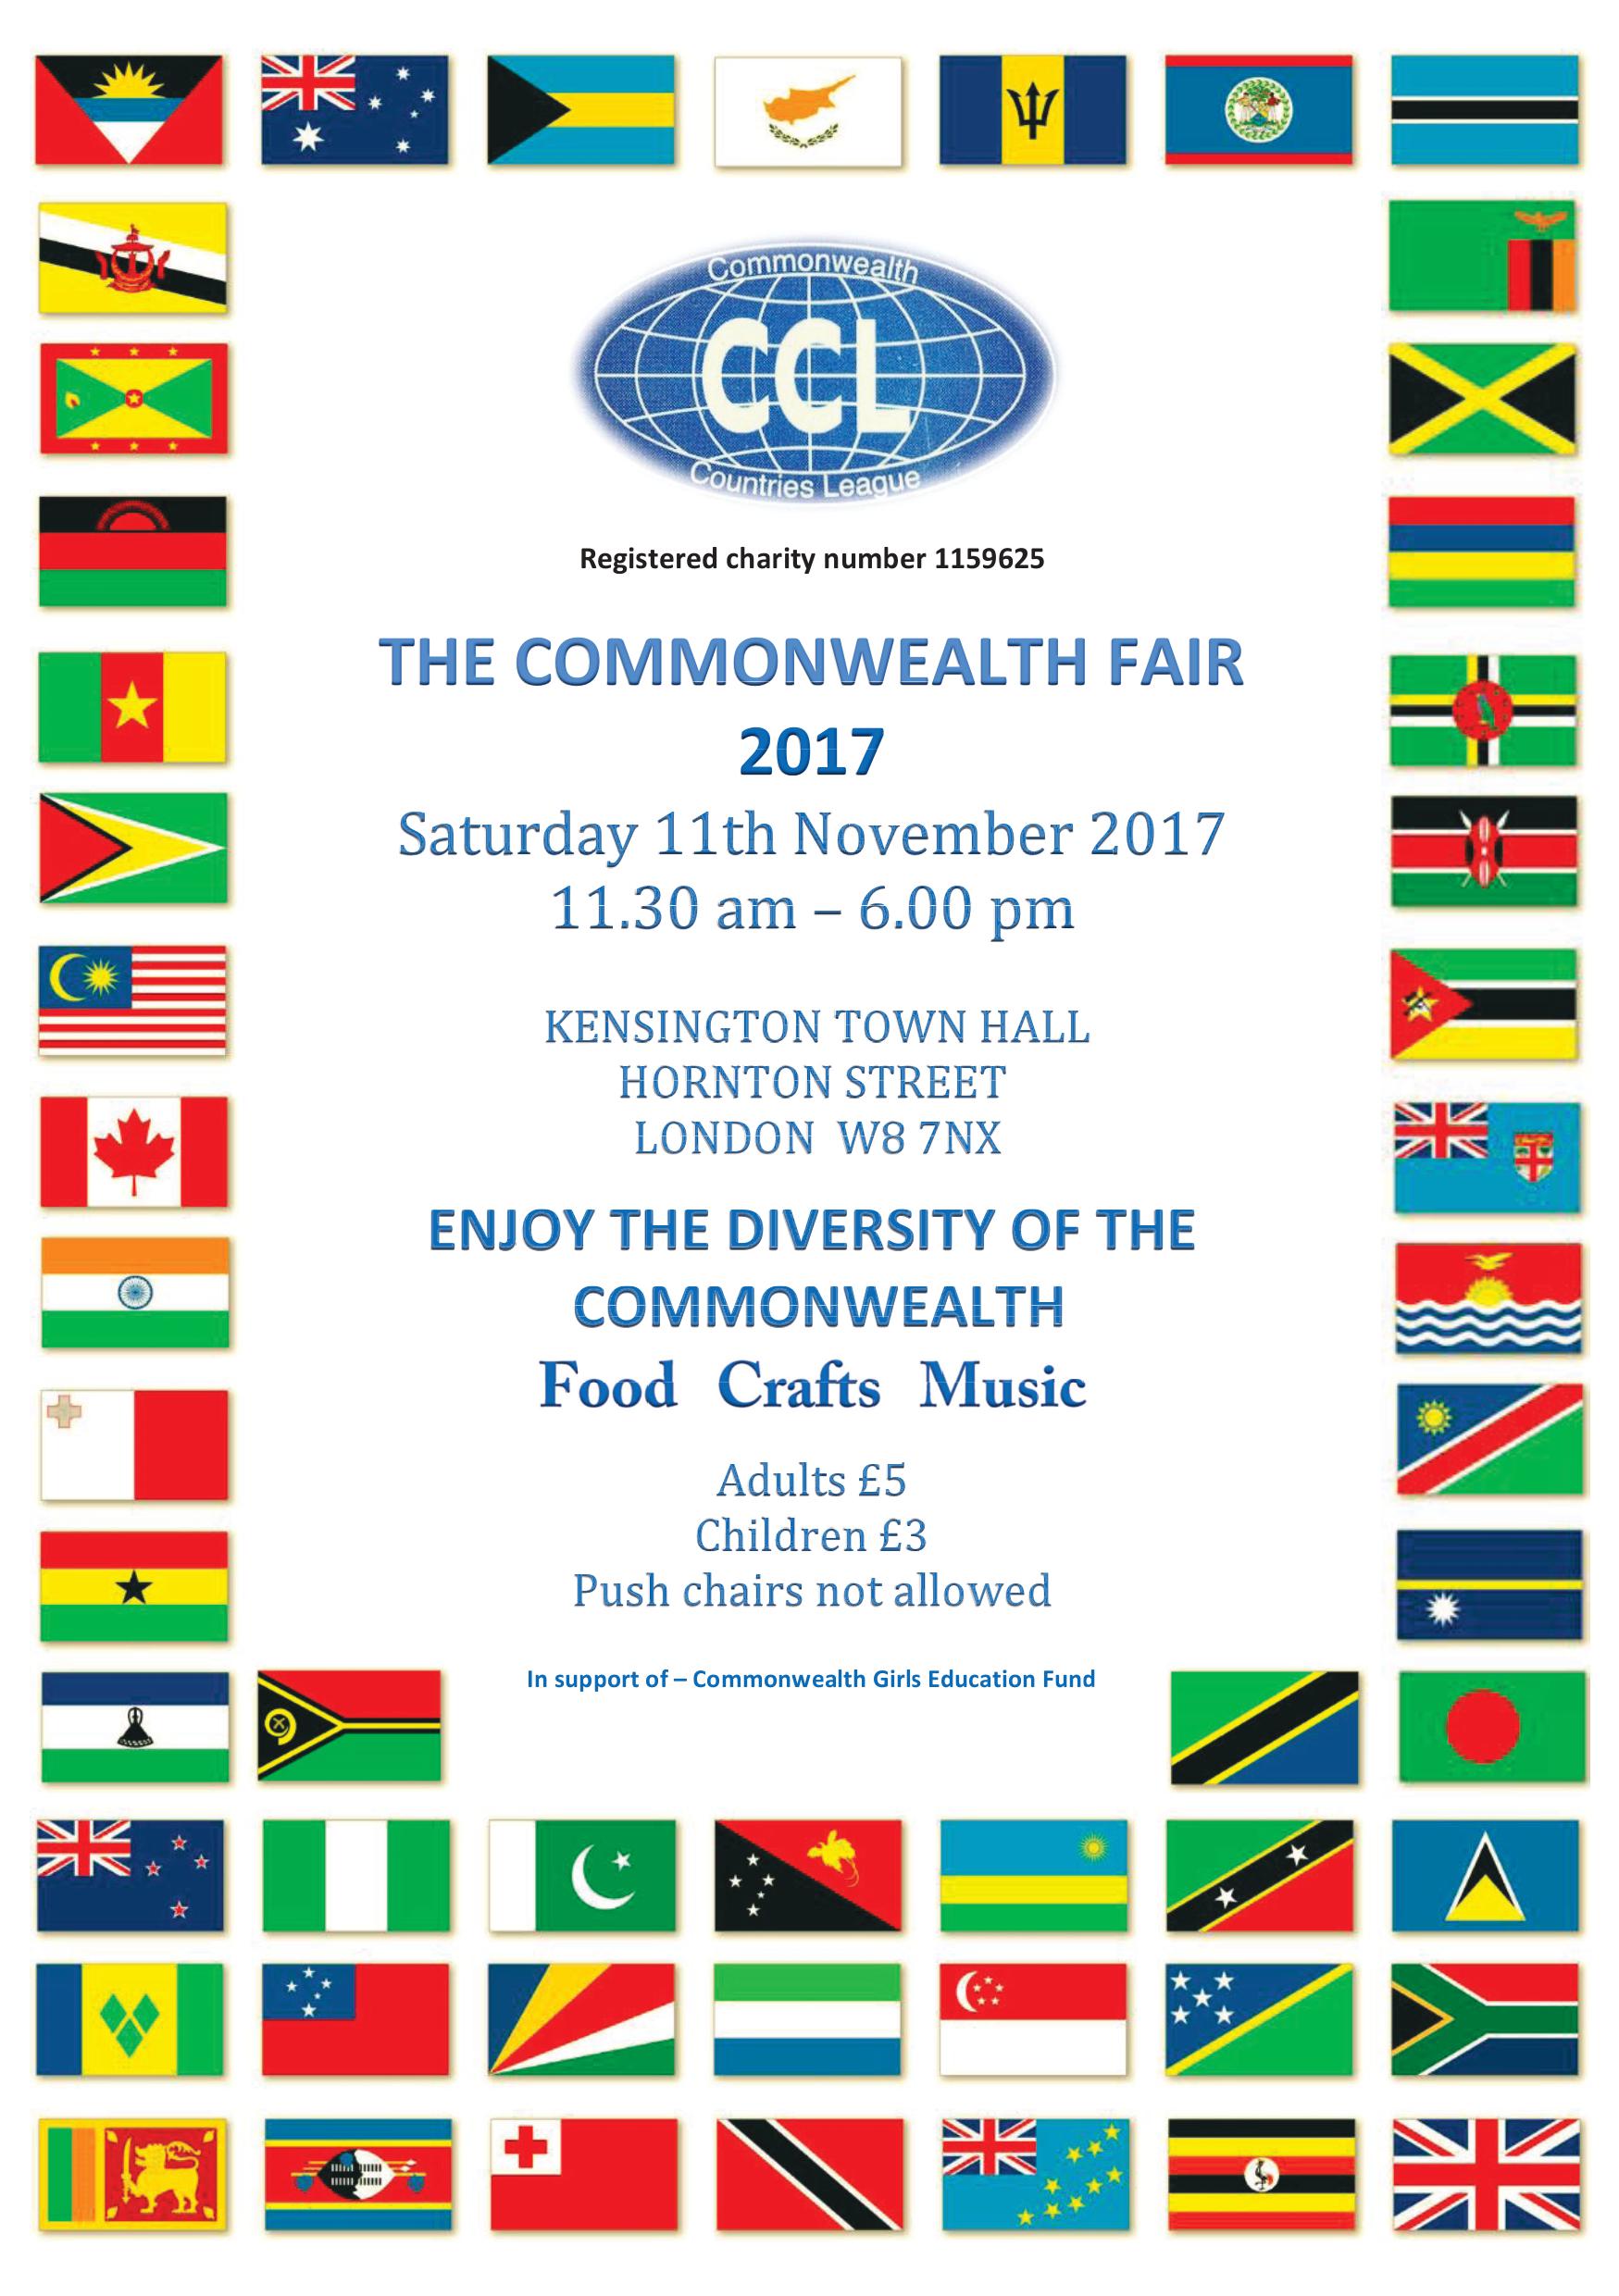 The Commonwealth Fair 2017